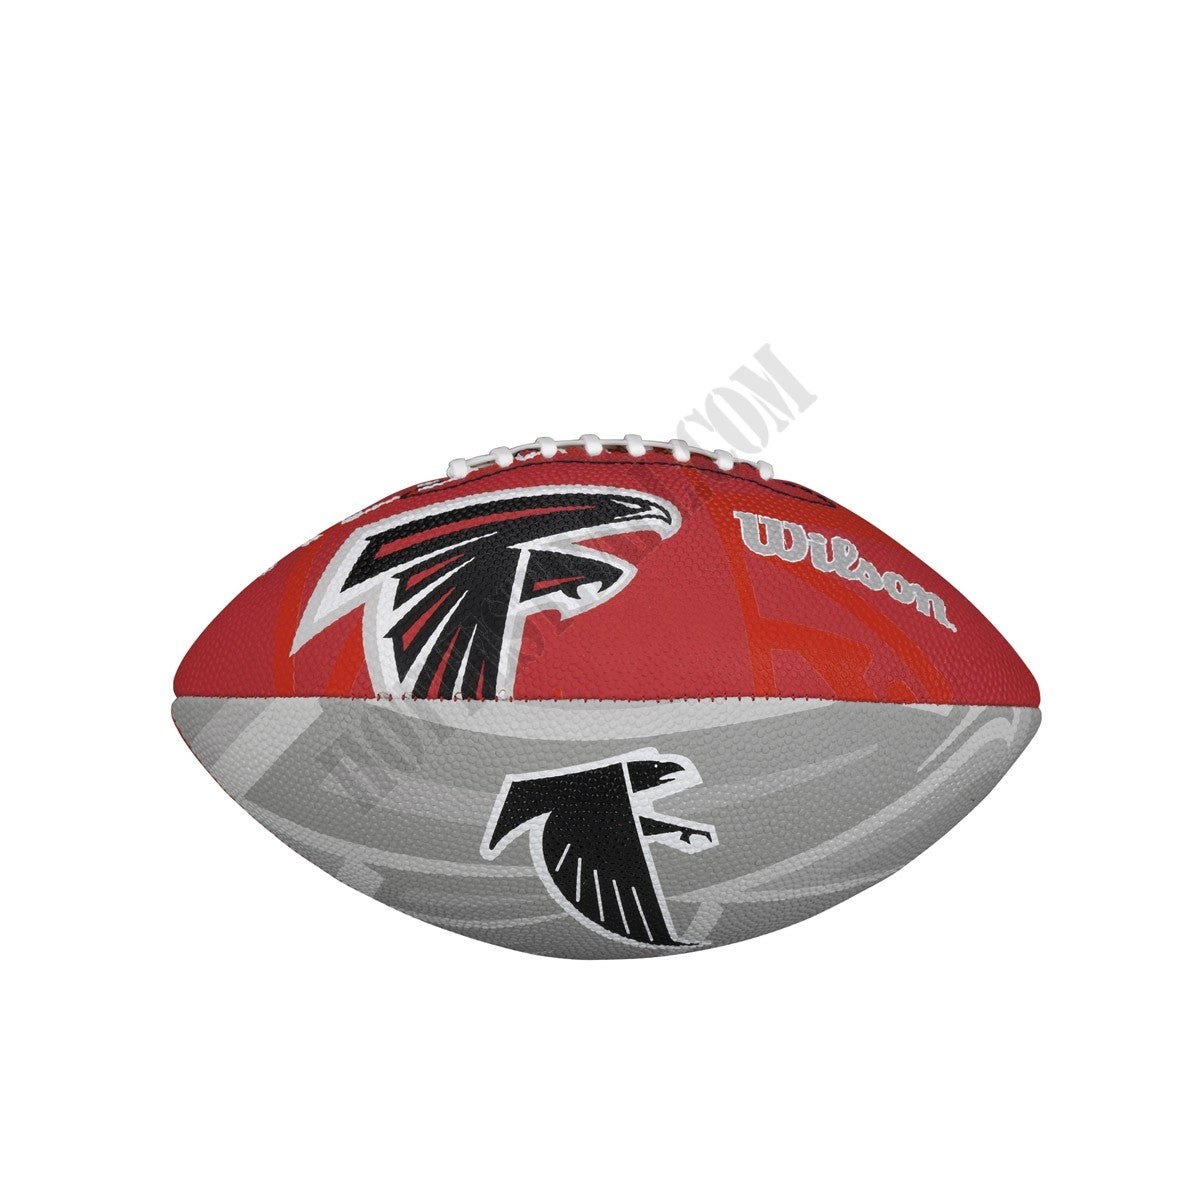 NFL Team Tailgate Football - Atlanta Falcons ● Wilson Promotions - NFL Team Tailgate Football - Atlanta Falcons ● Wilson Promotions